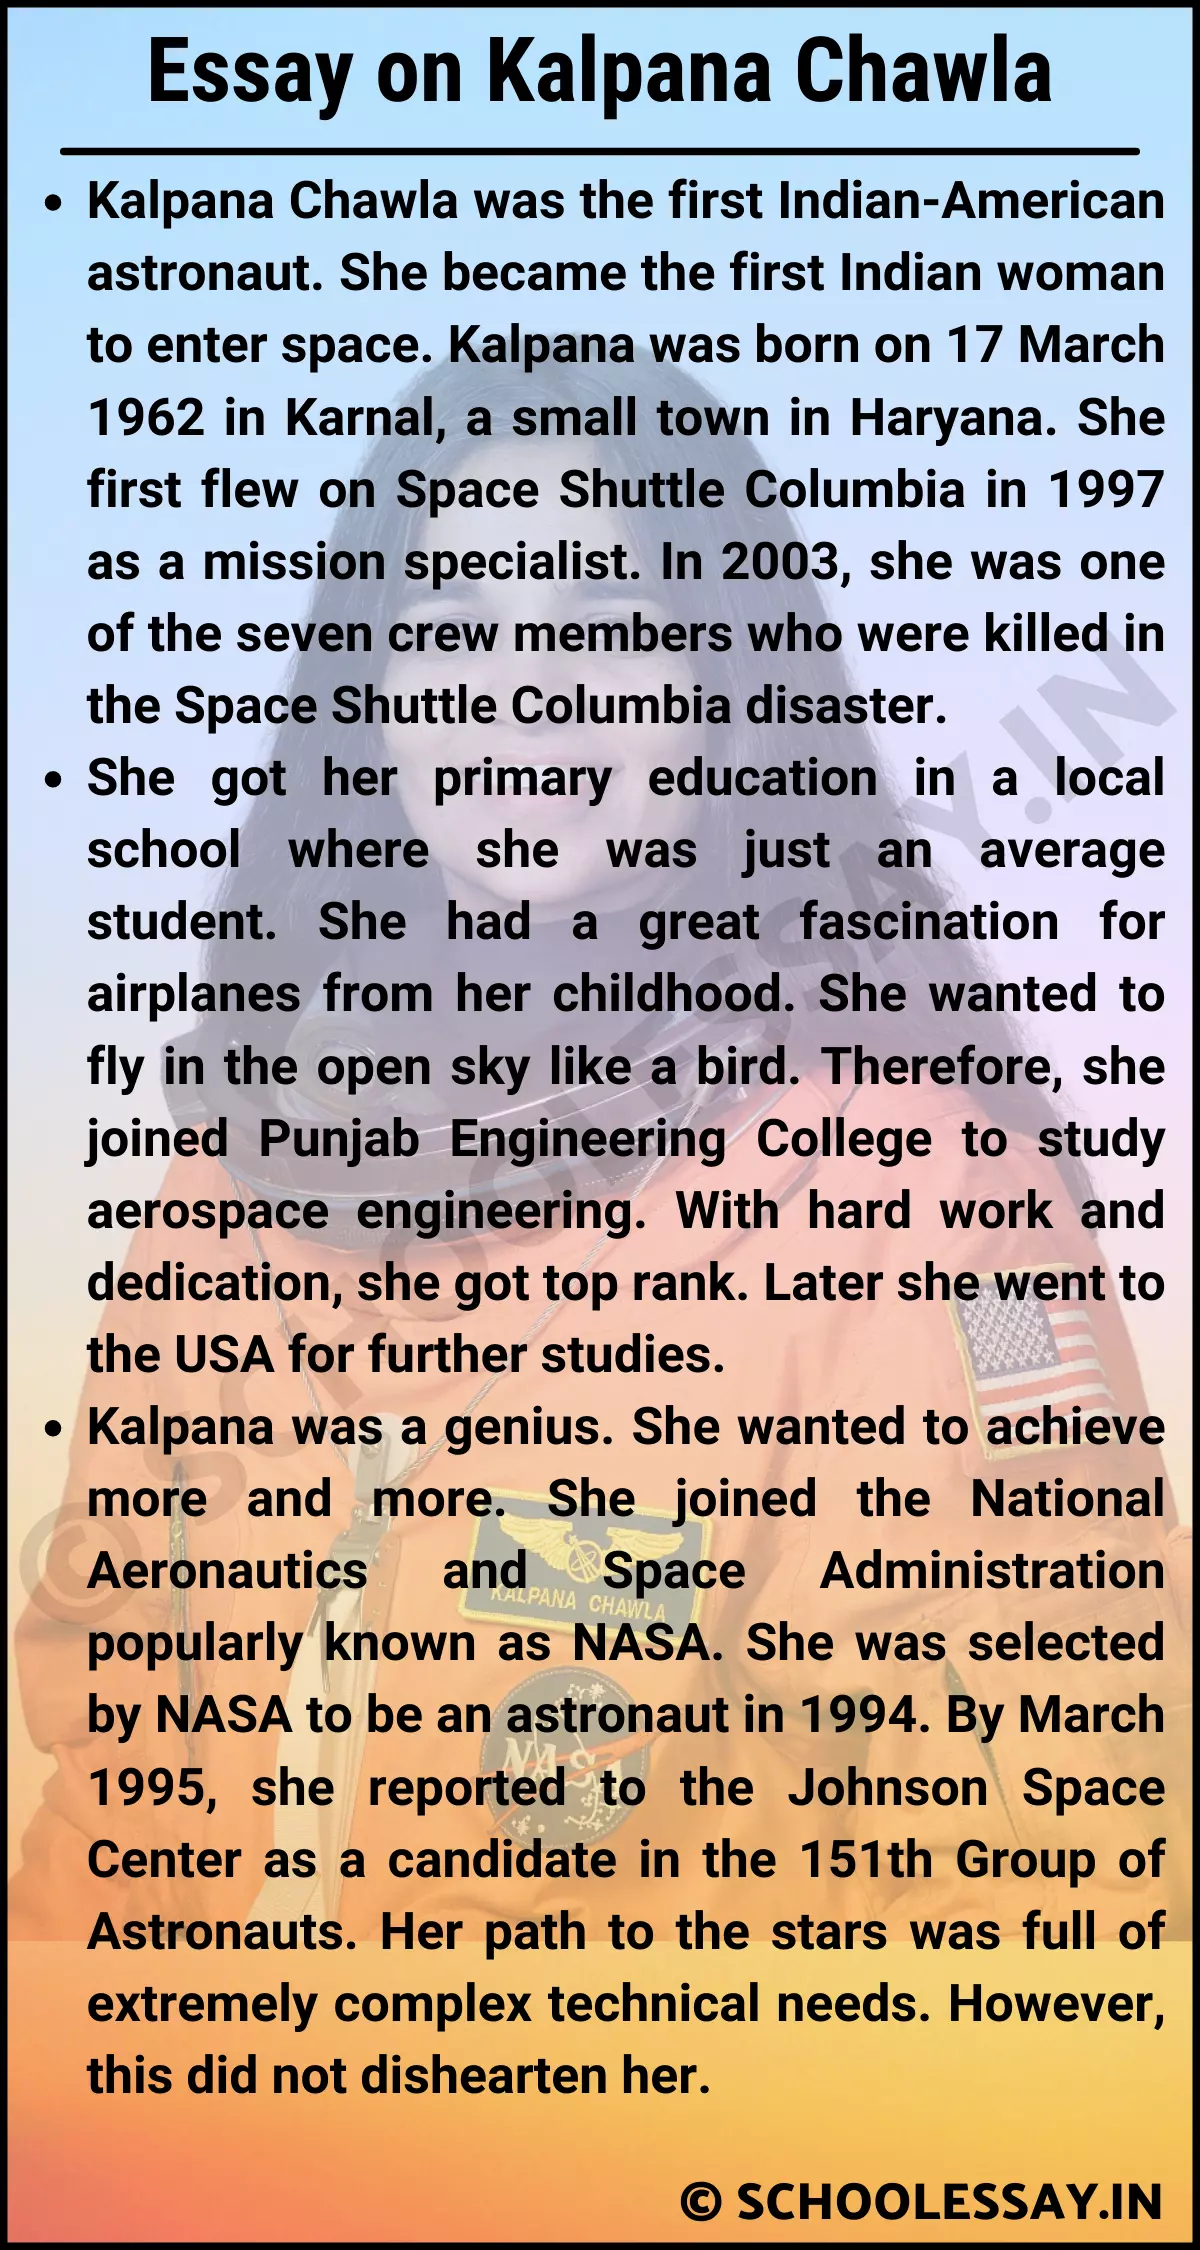 Essay on Kalpana Chawla